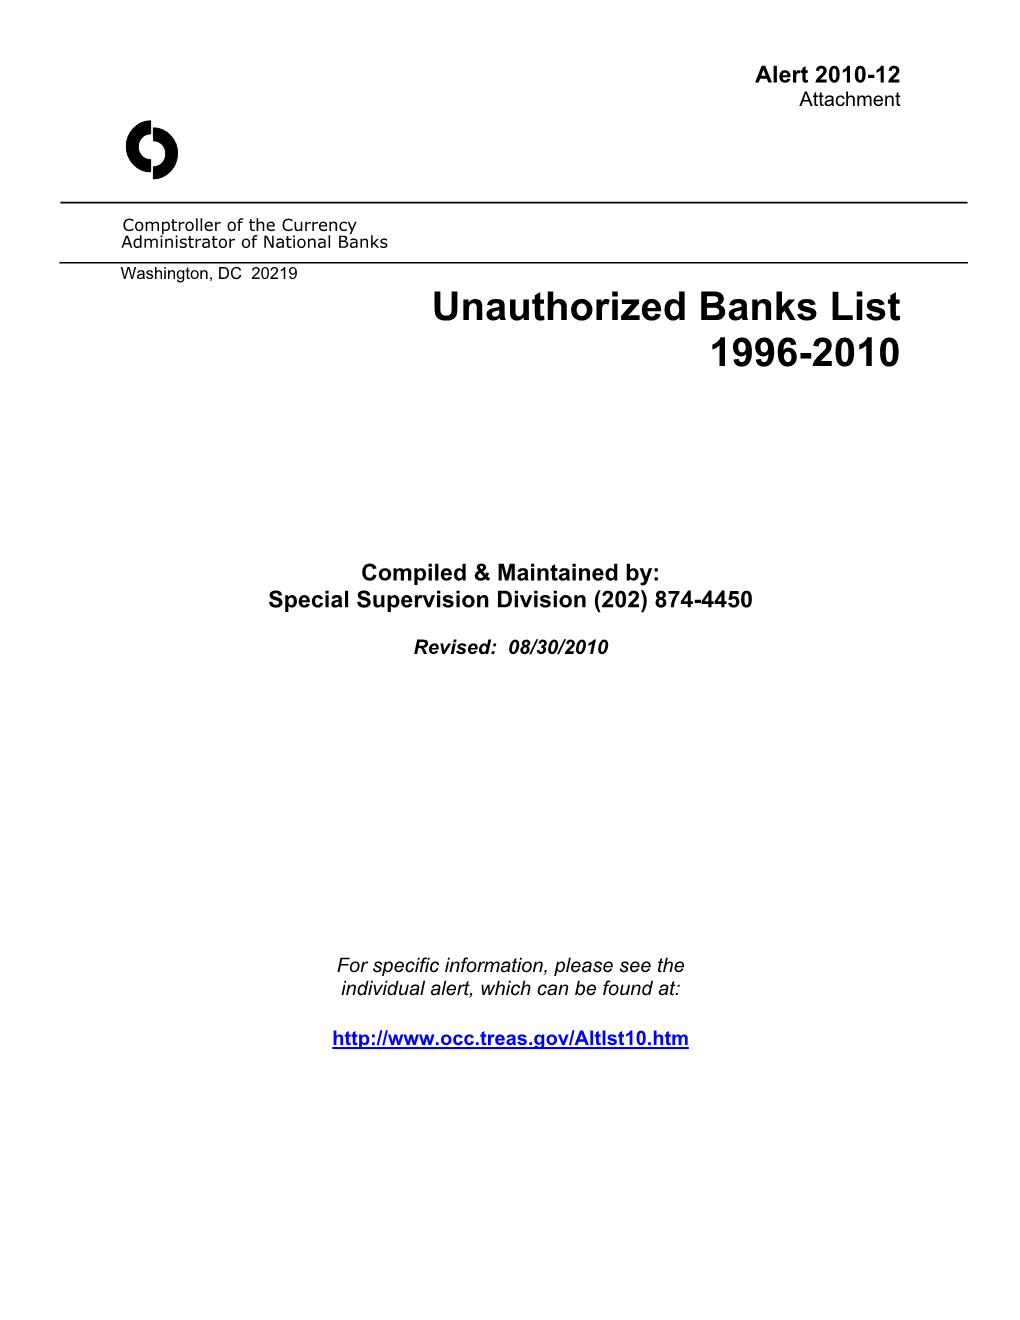 Unauthorized Banks List 1996-2010